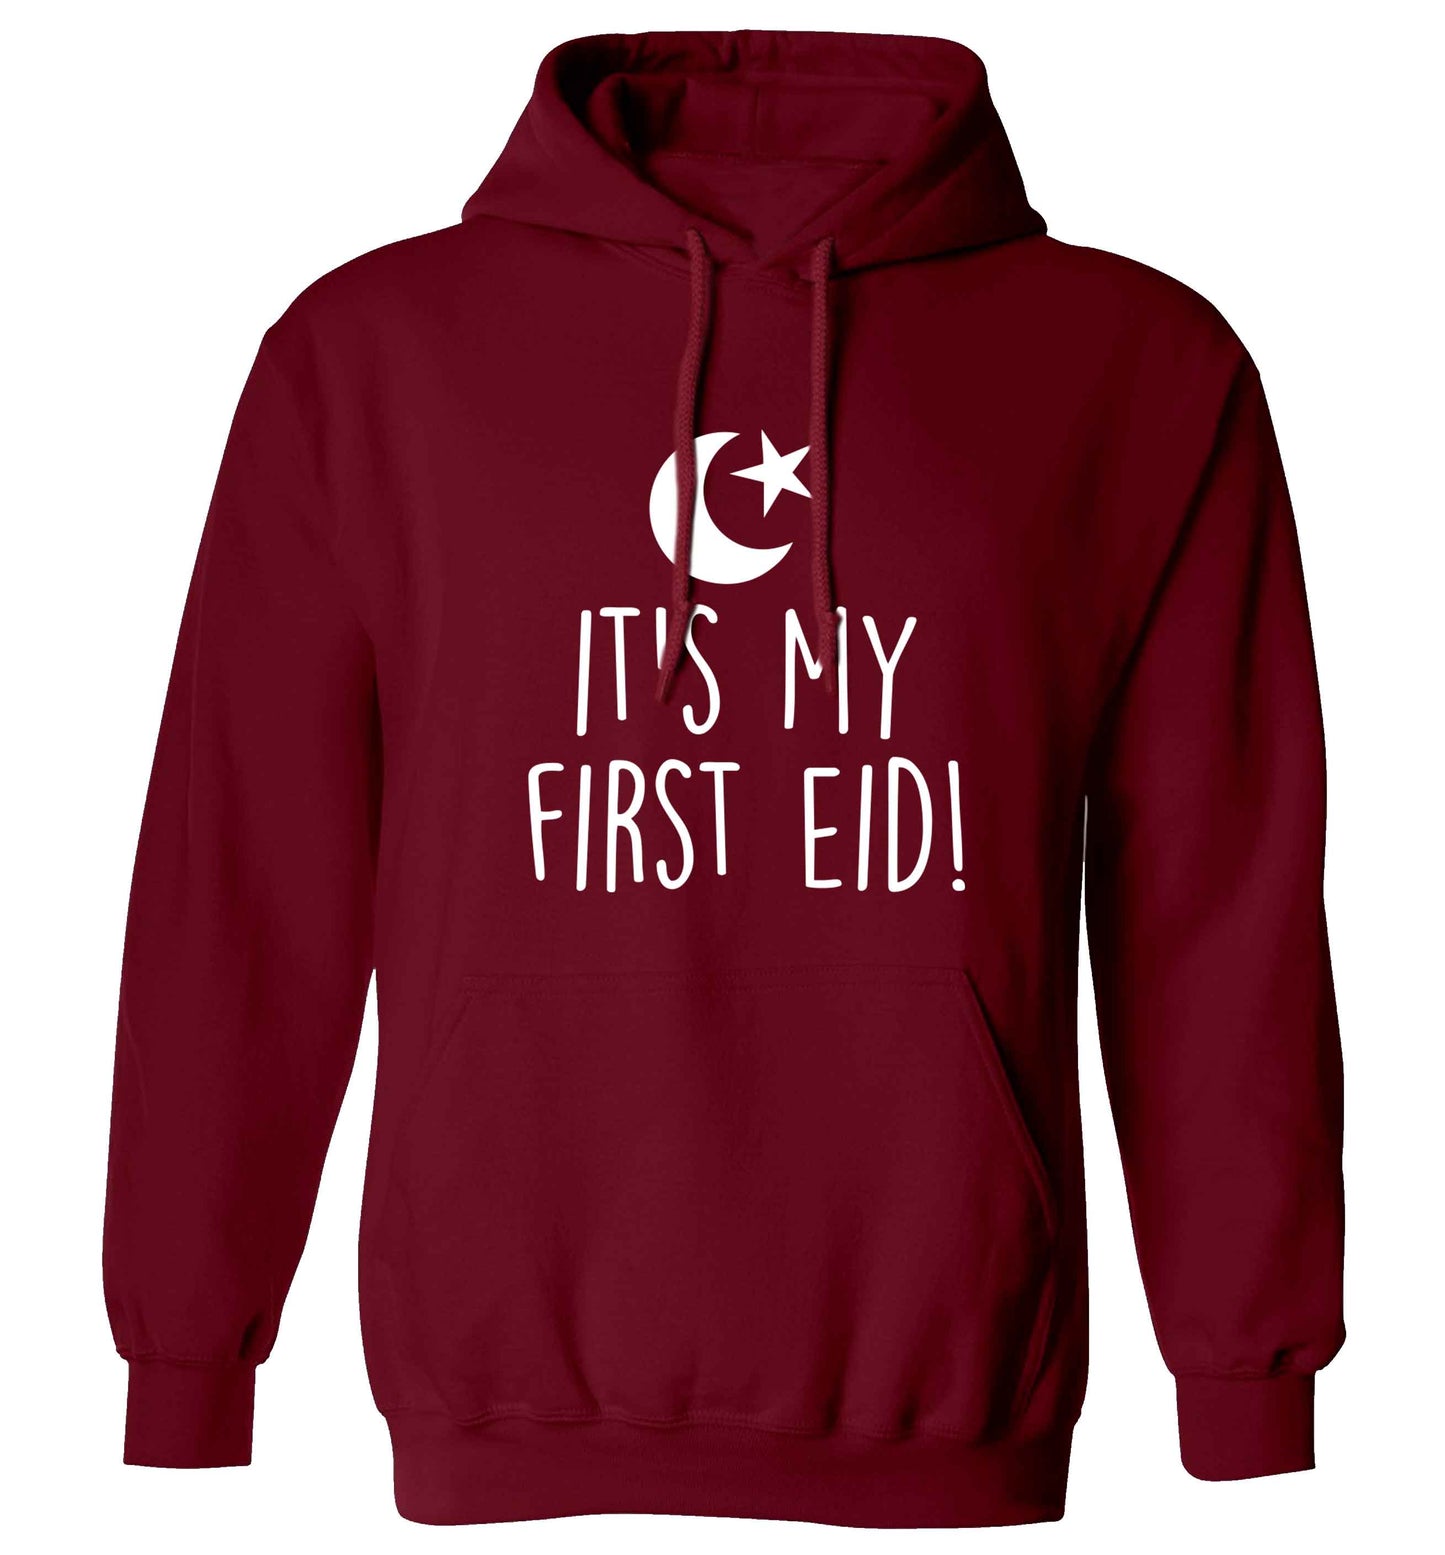 It's my first Eid adults unisex maroon hoodie 2XL